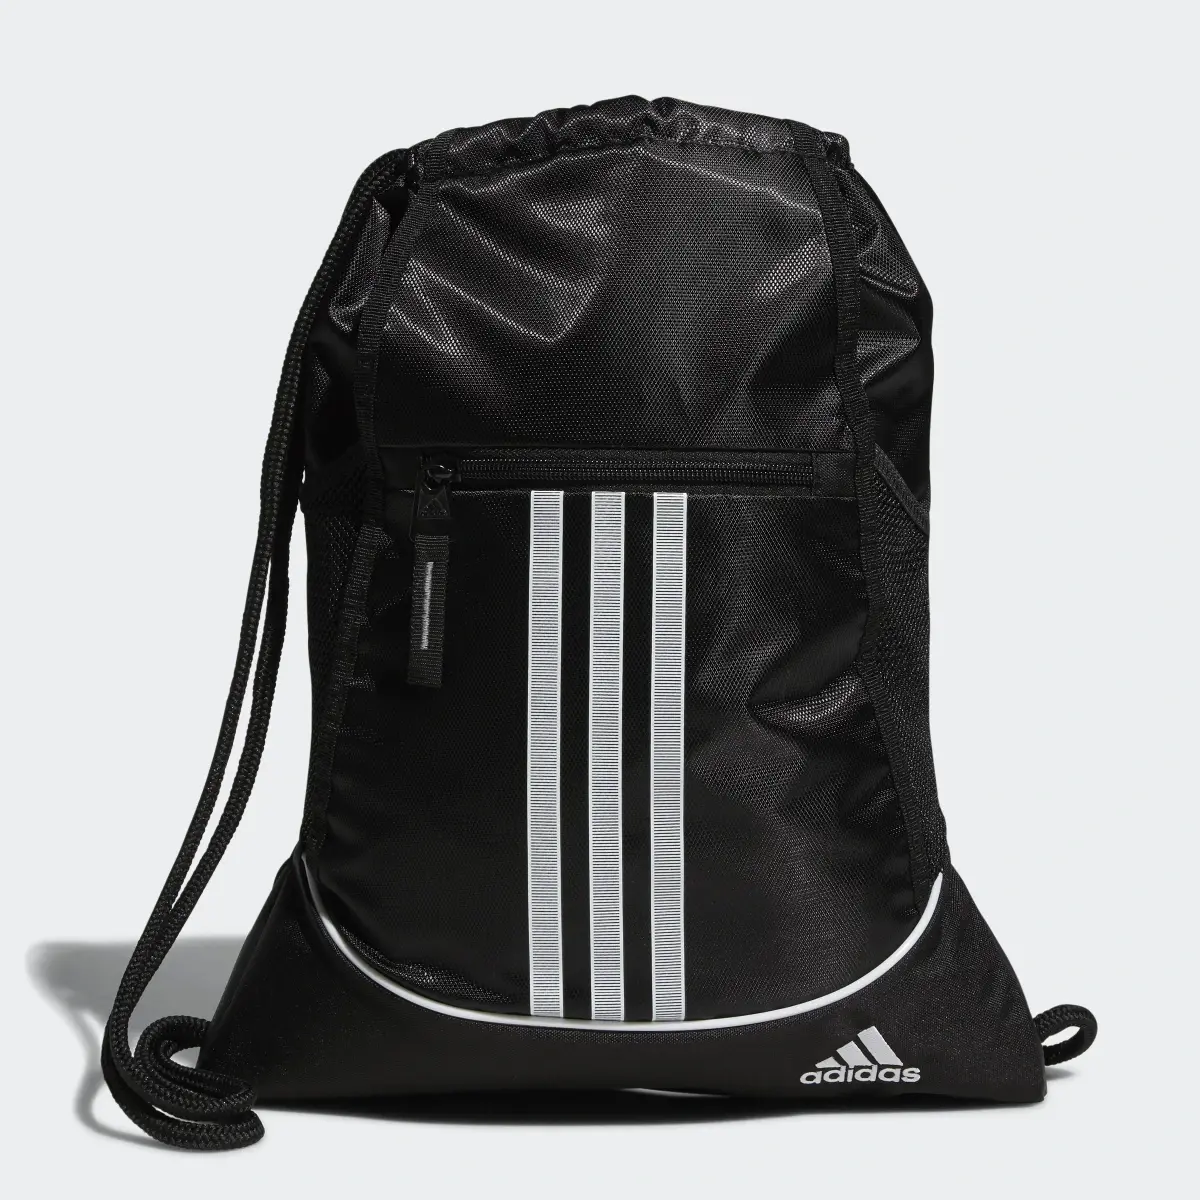 Adidas Alliance Sackpack. 1